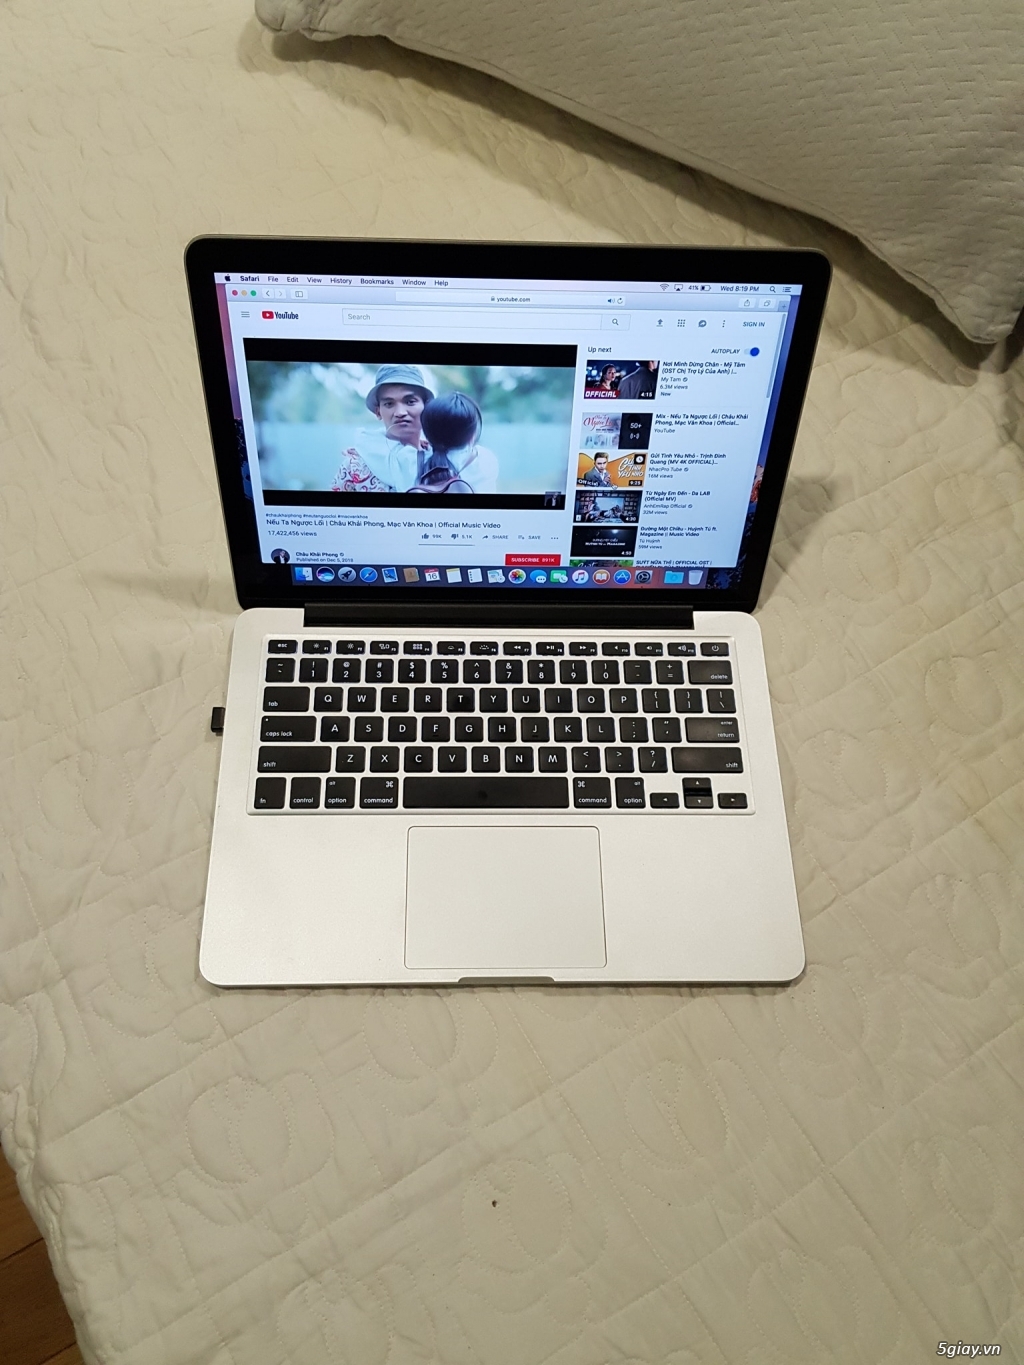 MacBook Pro (Retina, 13-inch, Mid 2014) - 4